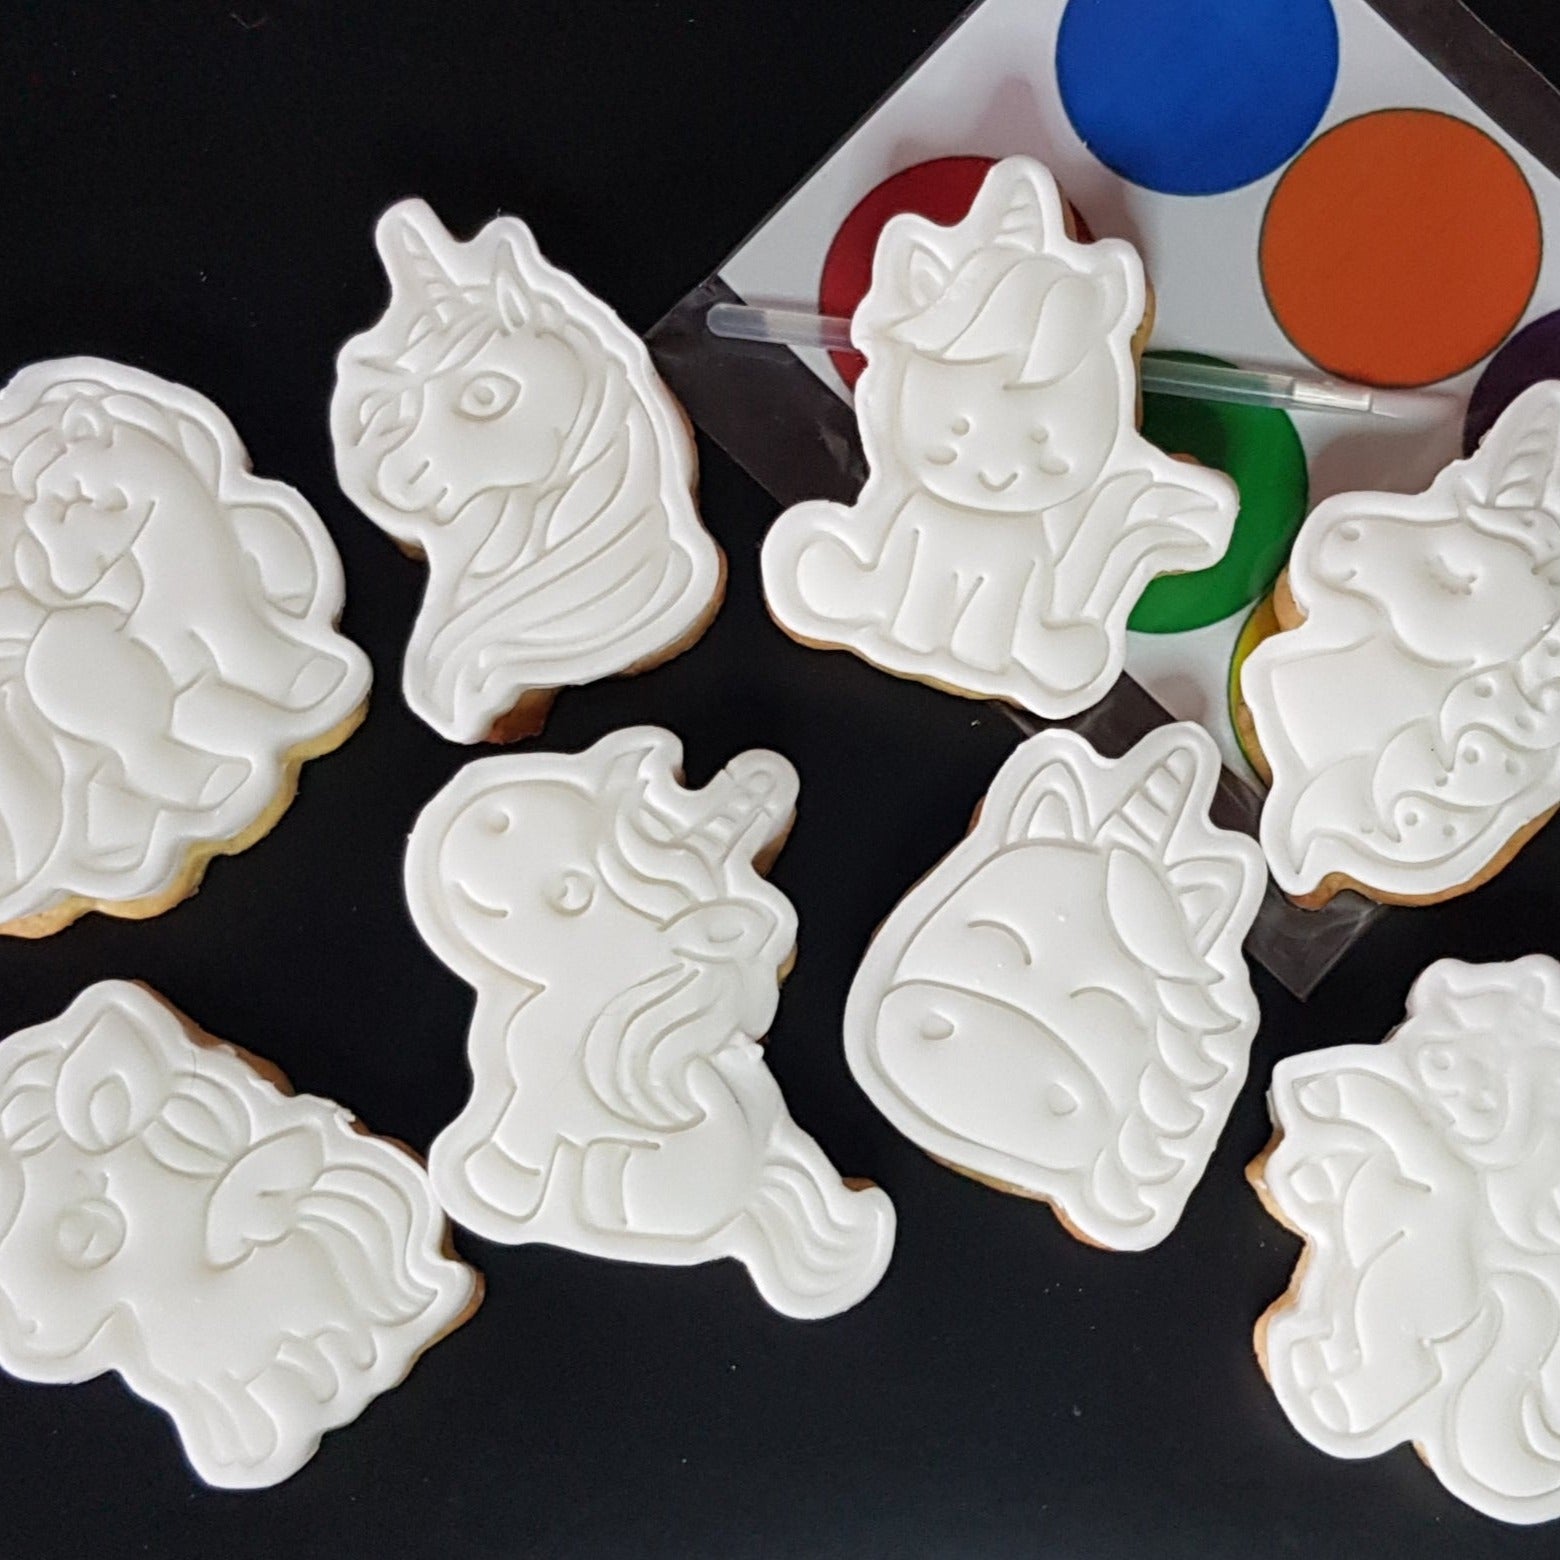 Paint your own cookie sets, unicorns, dinasours or jungle theme